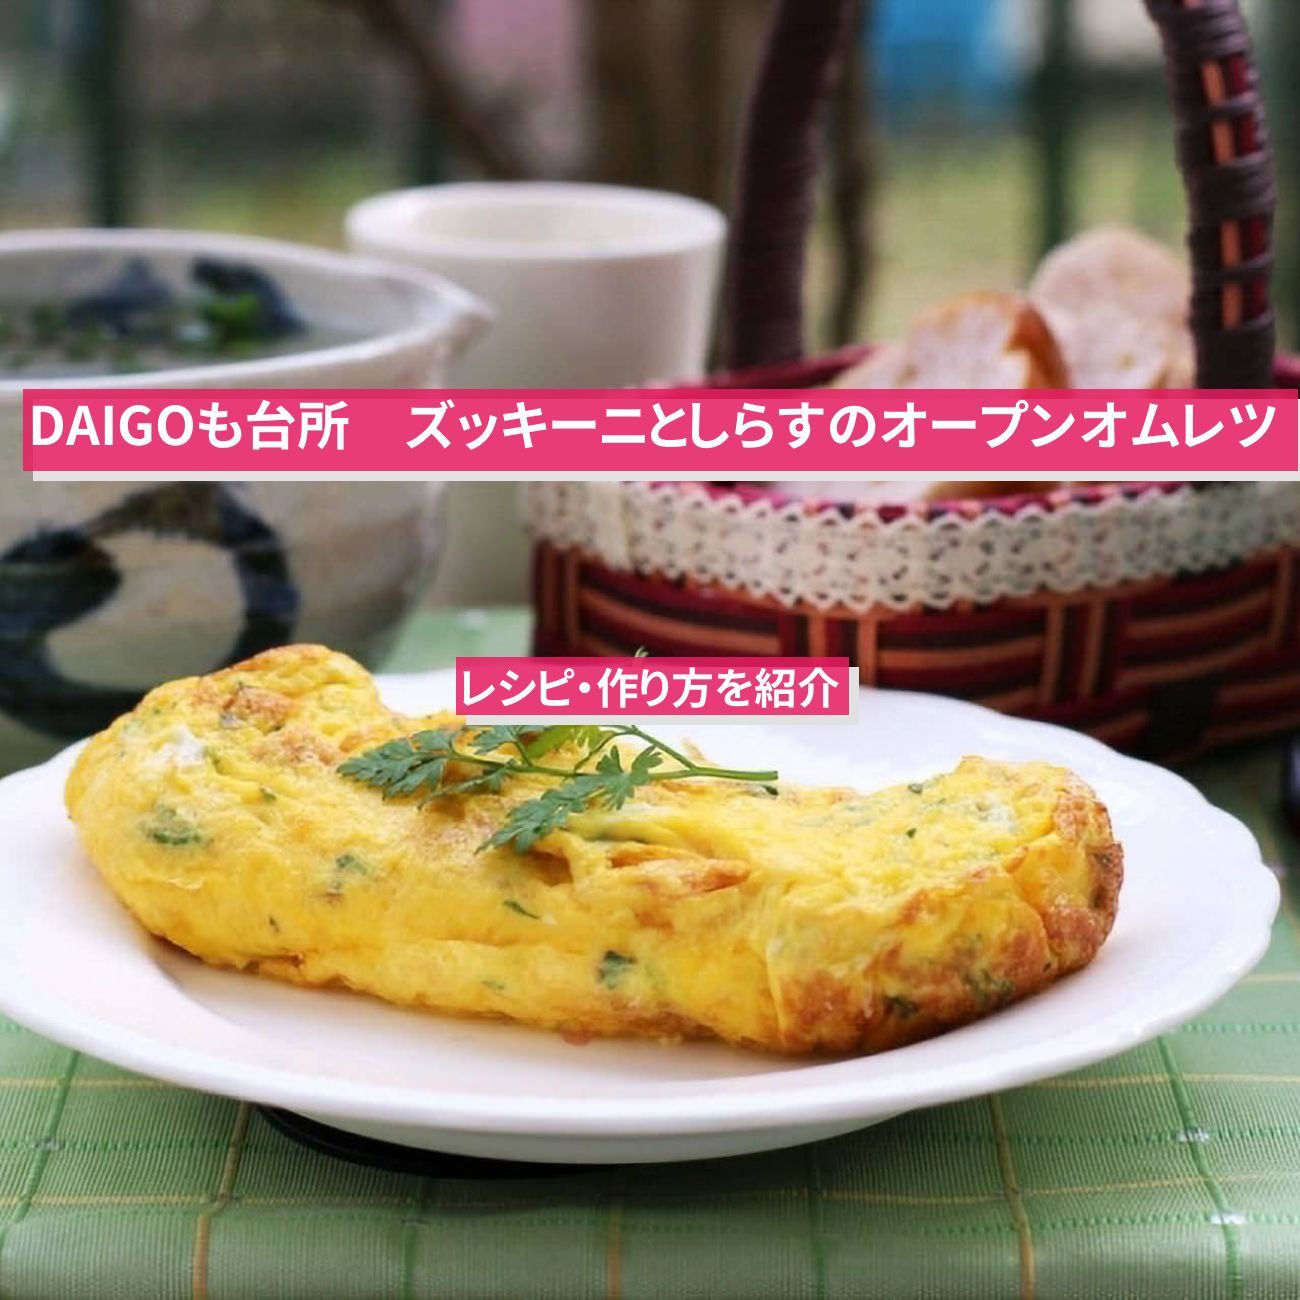 【DAIGOも台所】『ズッキーニとしらすのオープンオムレツ』のレシピ・作り方を紹介〔ダイゴも台所〕